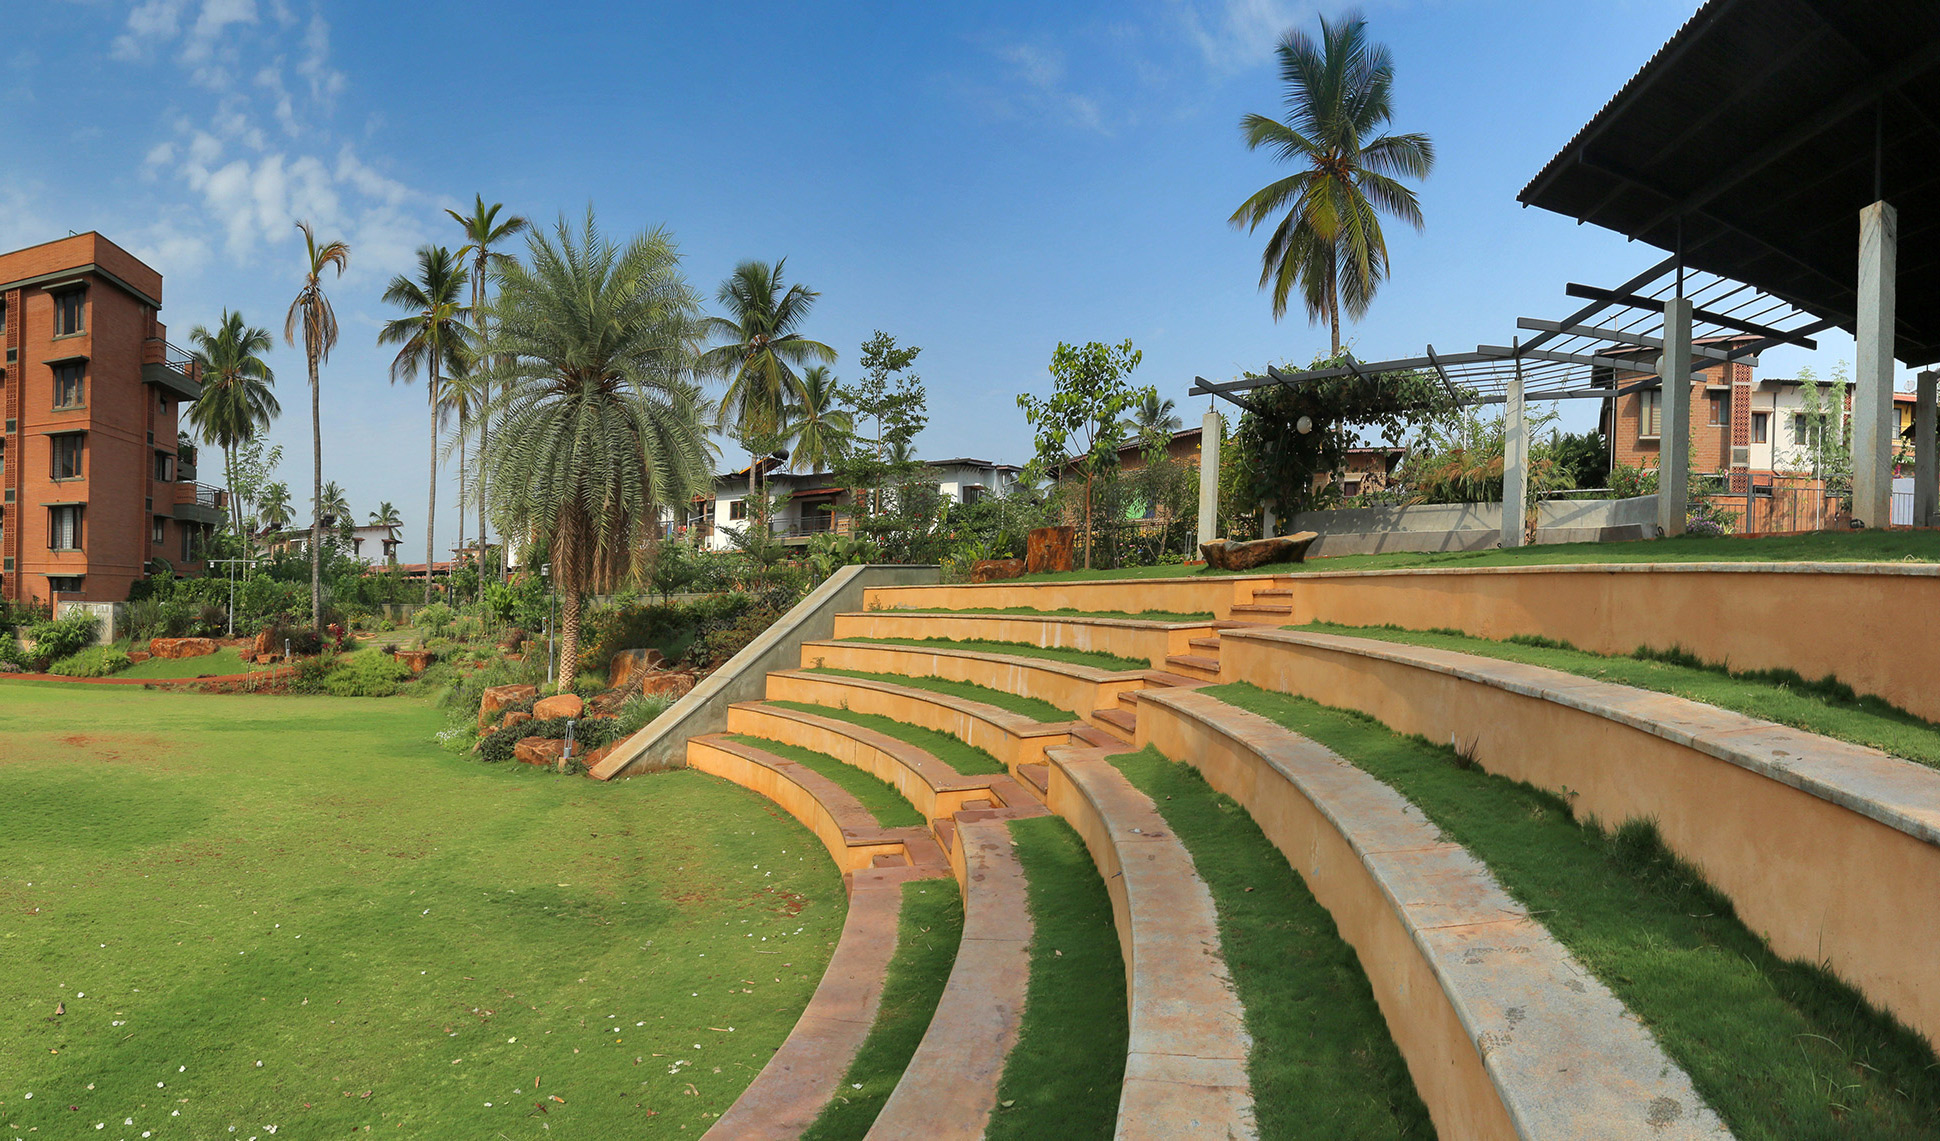 The amphitheatre at Good Earth Malhar